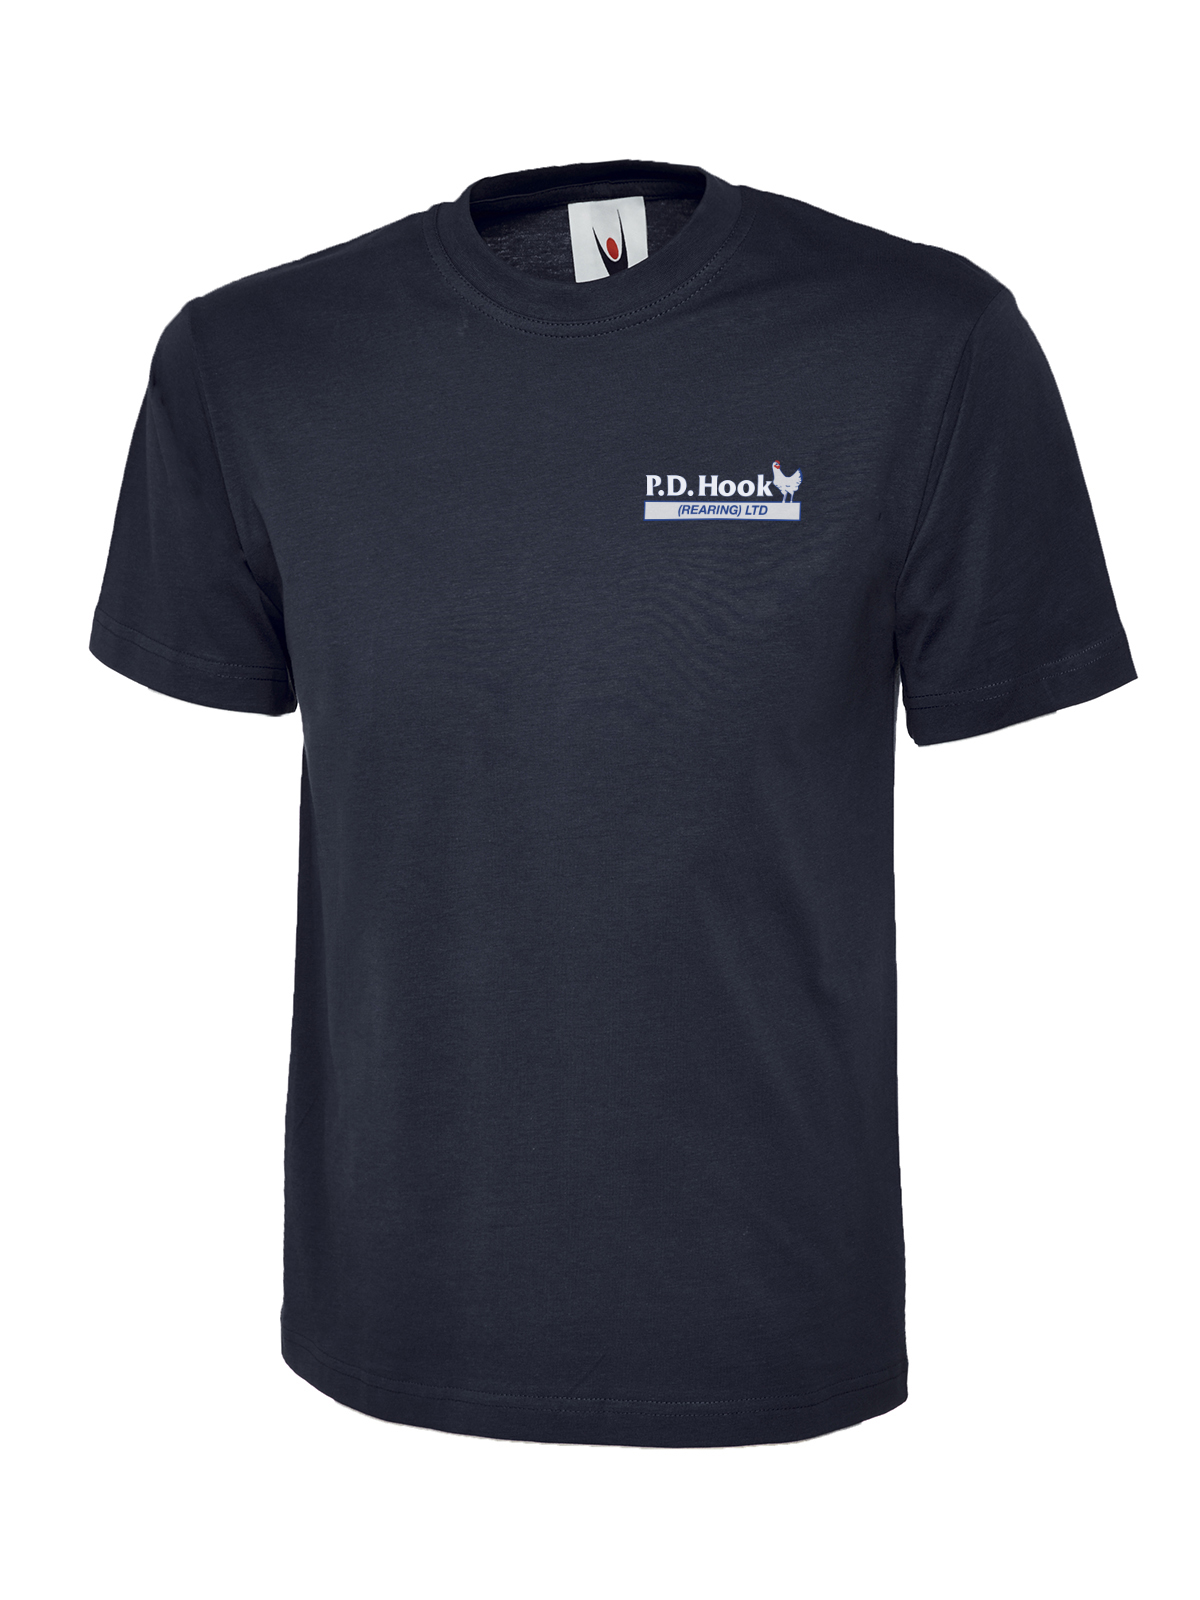 P D Hook (Rearing) Ltd - T-Shirt, Navy - Size Medium